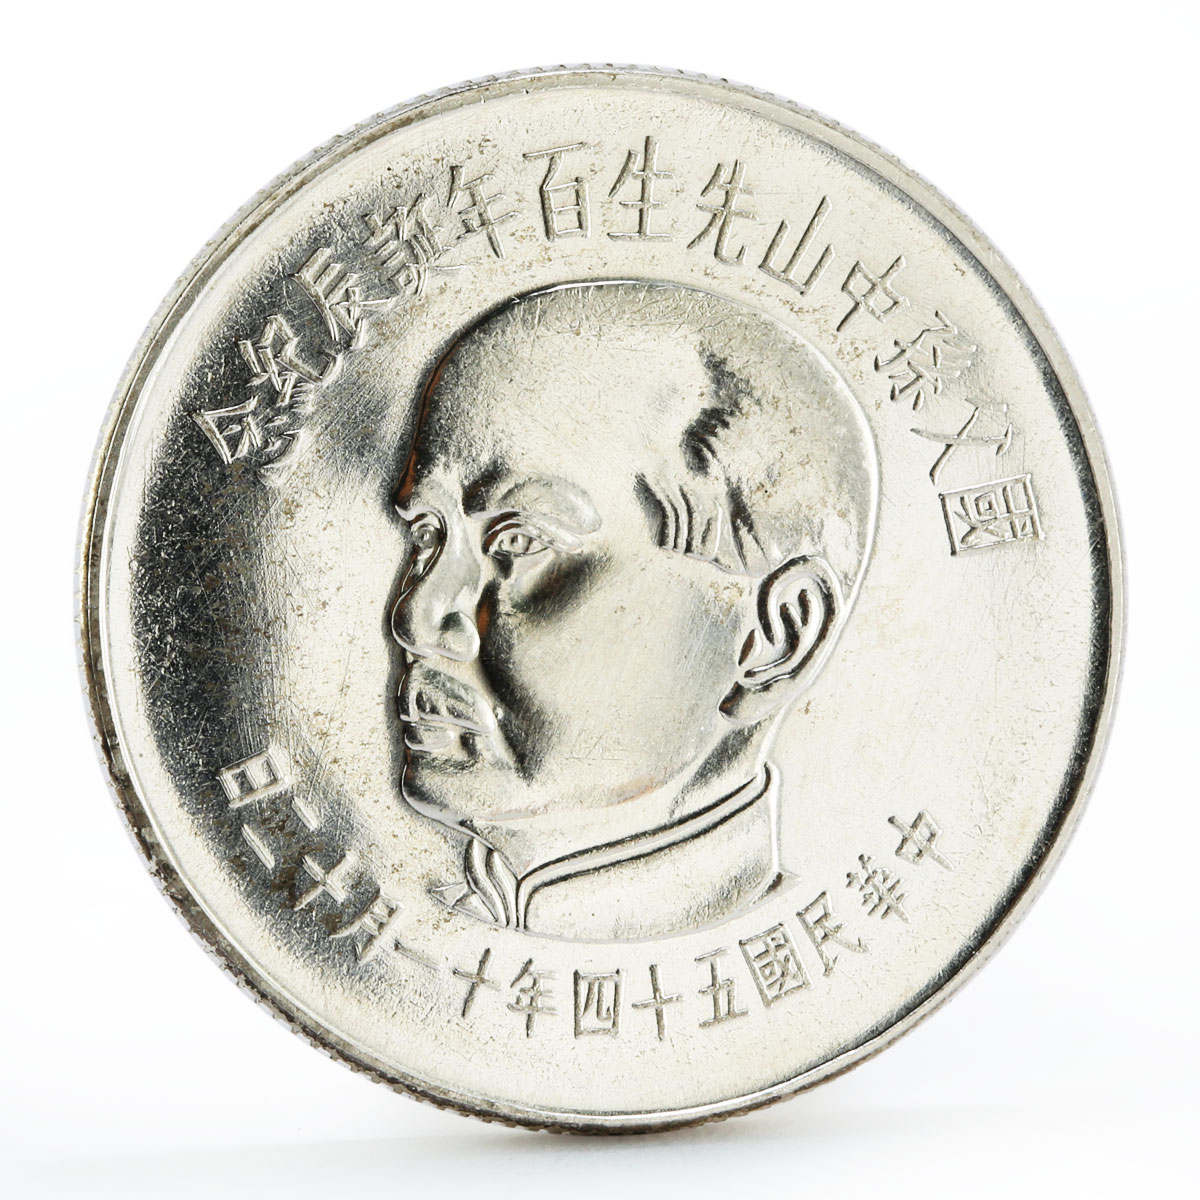 Taiwan 100 dollars Revolutionary Sun Yat Sen Deer Landscape silver coin 1965